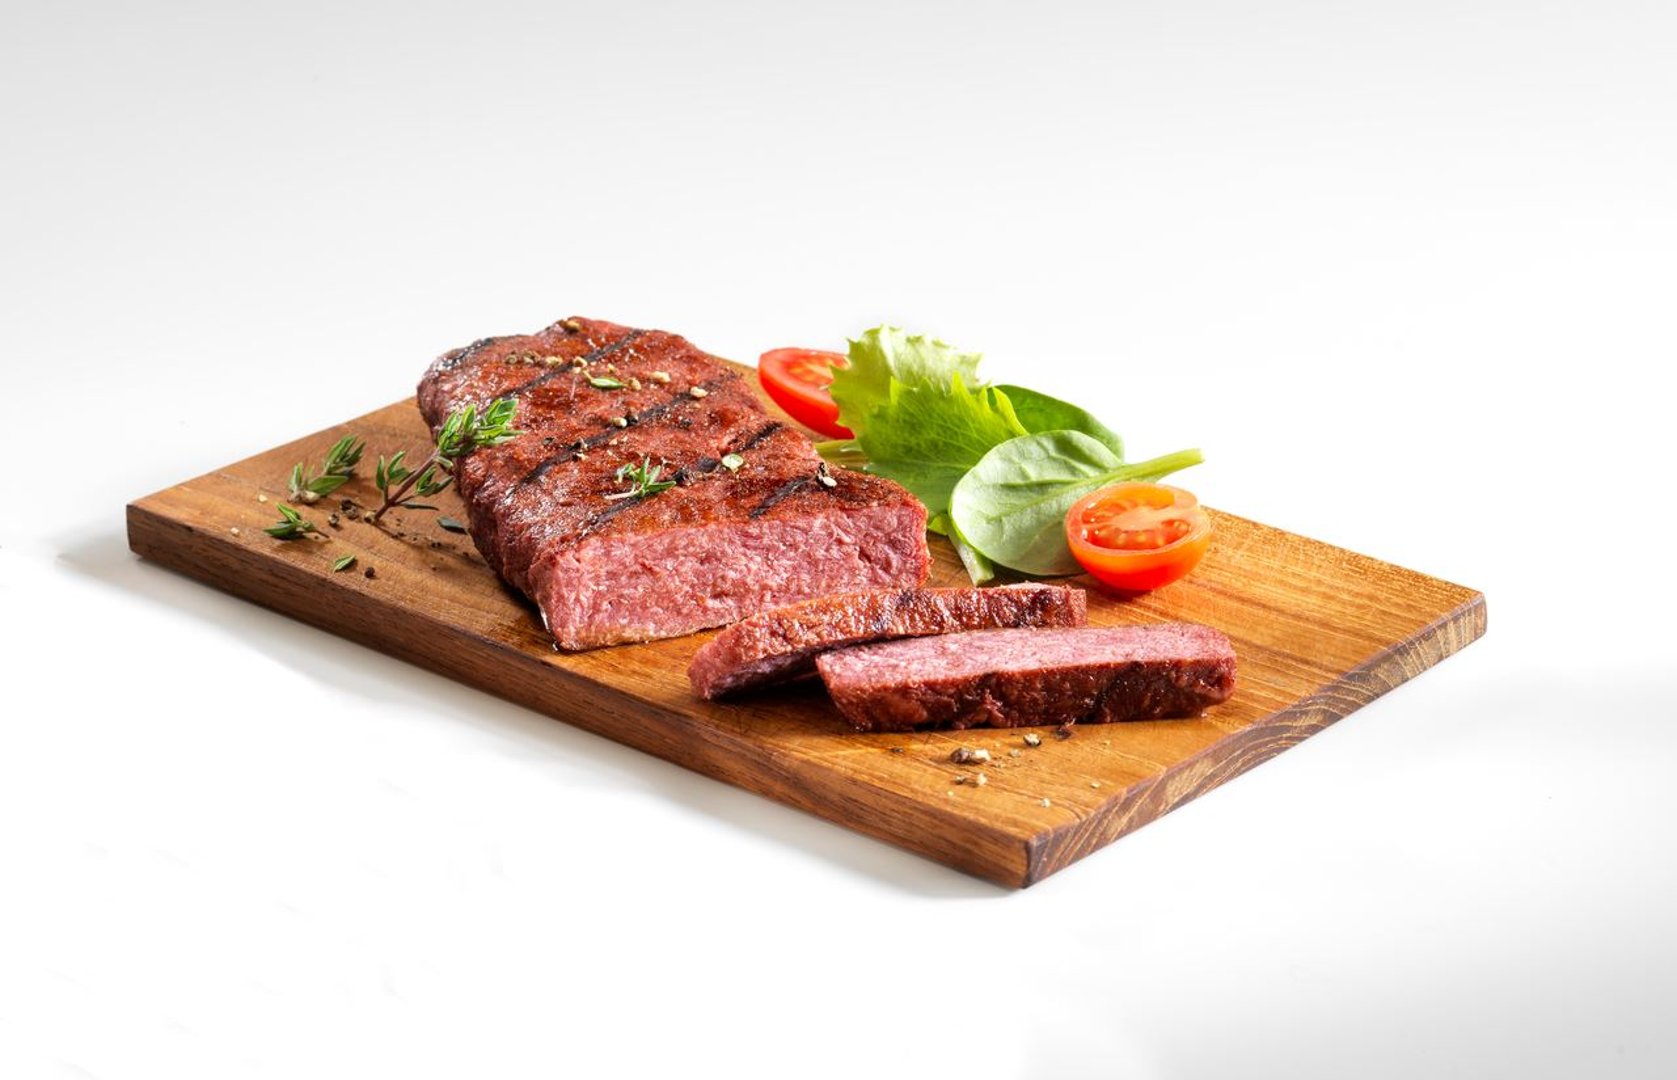 hilcona - The Green Mountain Plant Based Steak tiefgefroren 7 Stück à ca. 200 g - 1,4 kg Beutel